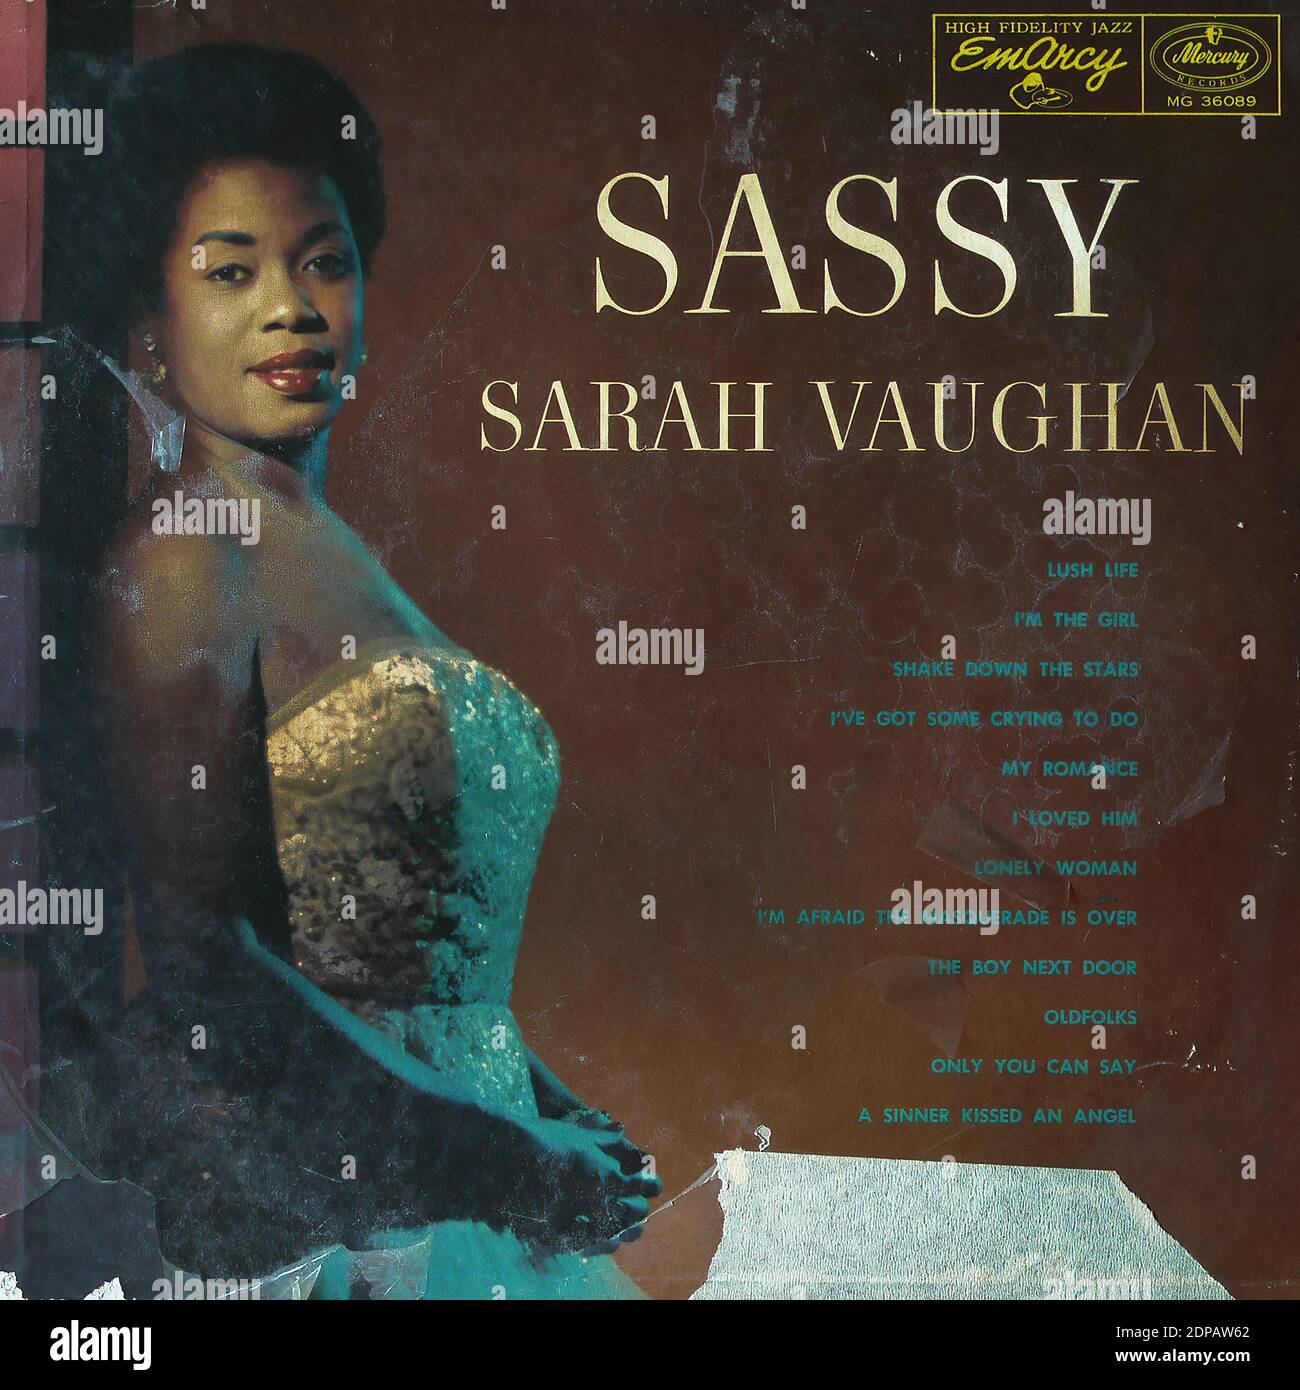 Sarah Vaughan - Sassy, EmArcy MG 36089  - Vintage vinyl album cover Stock Photo